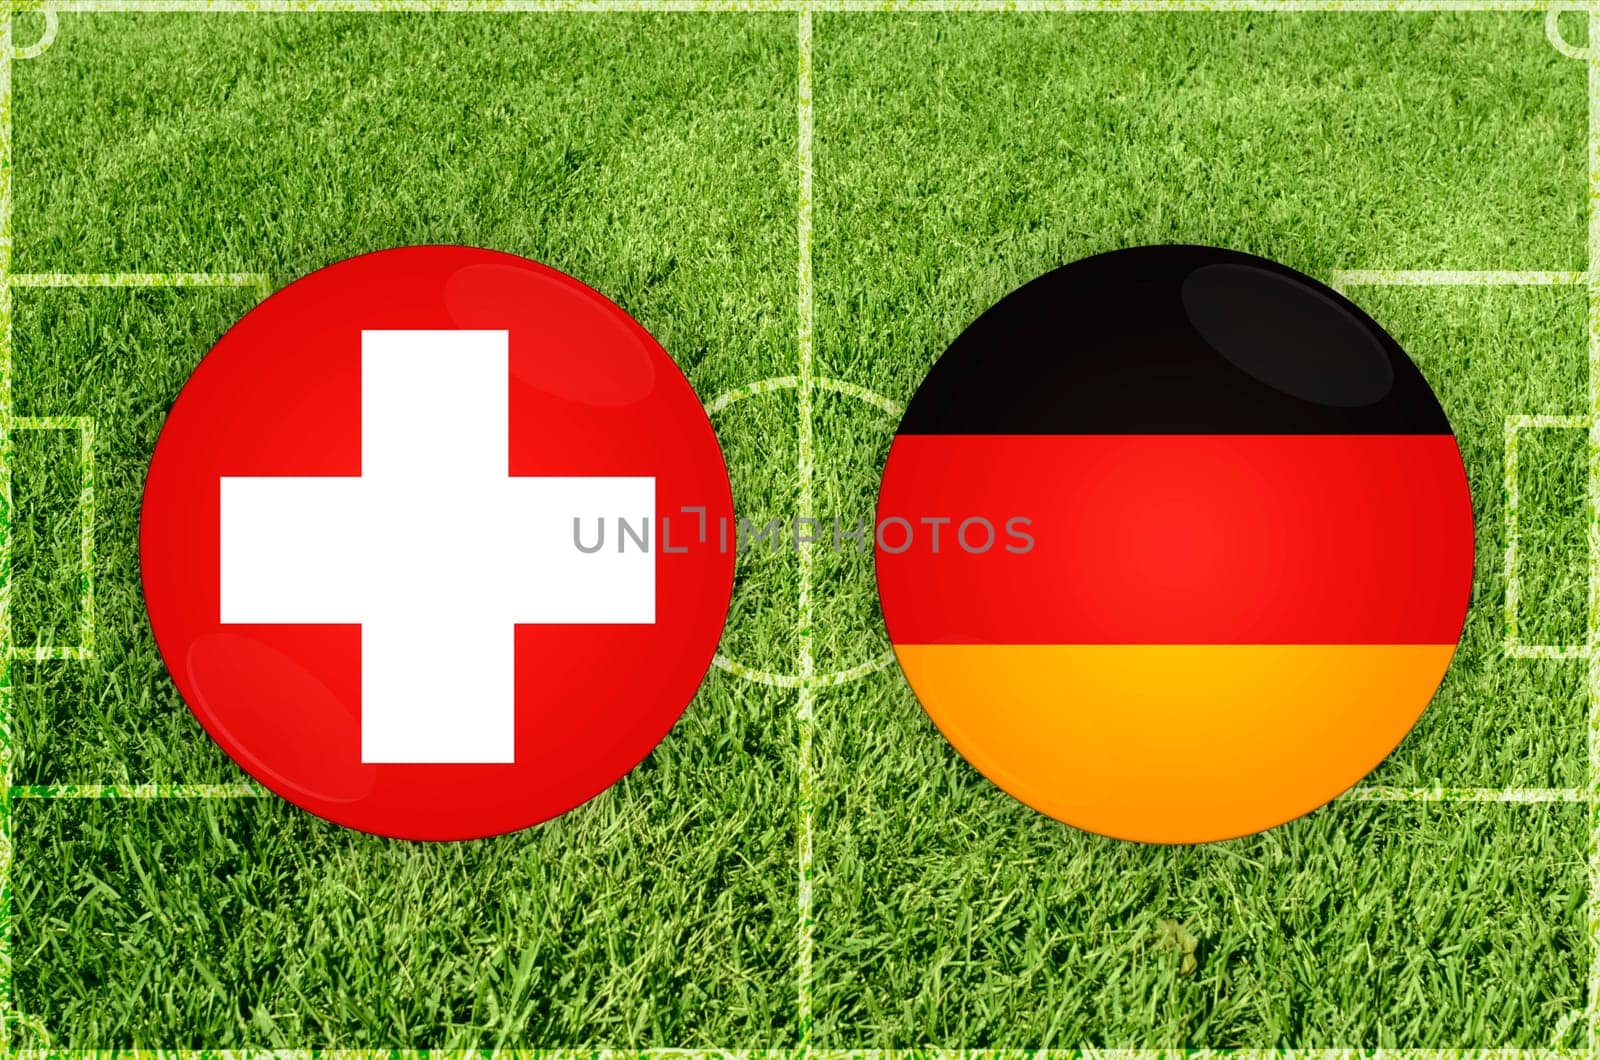 Switzerland vs Germany football match by rusak